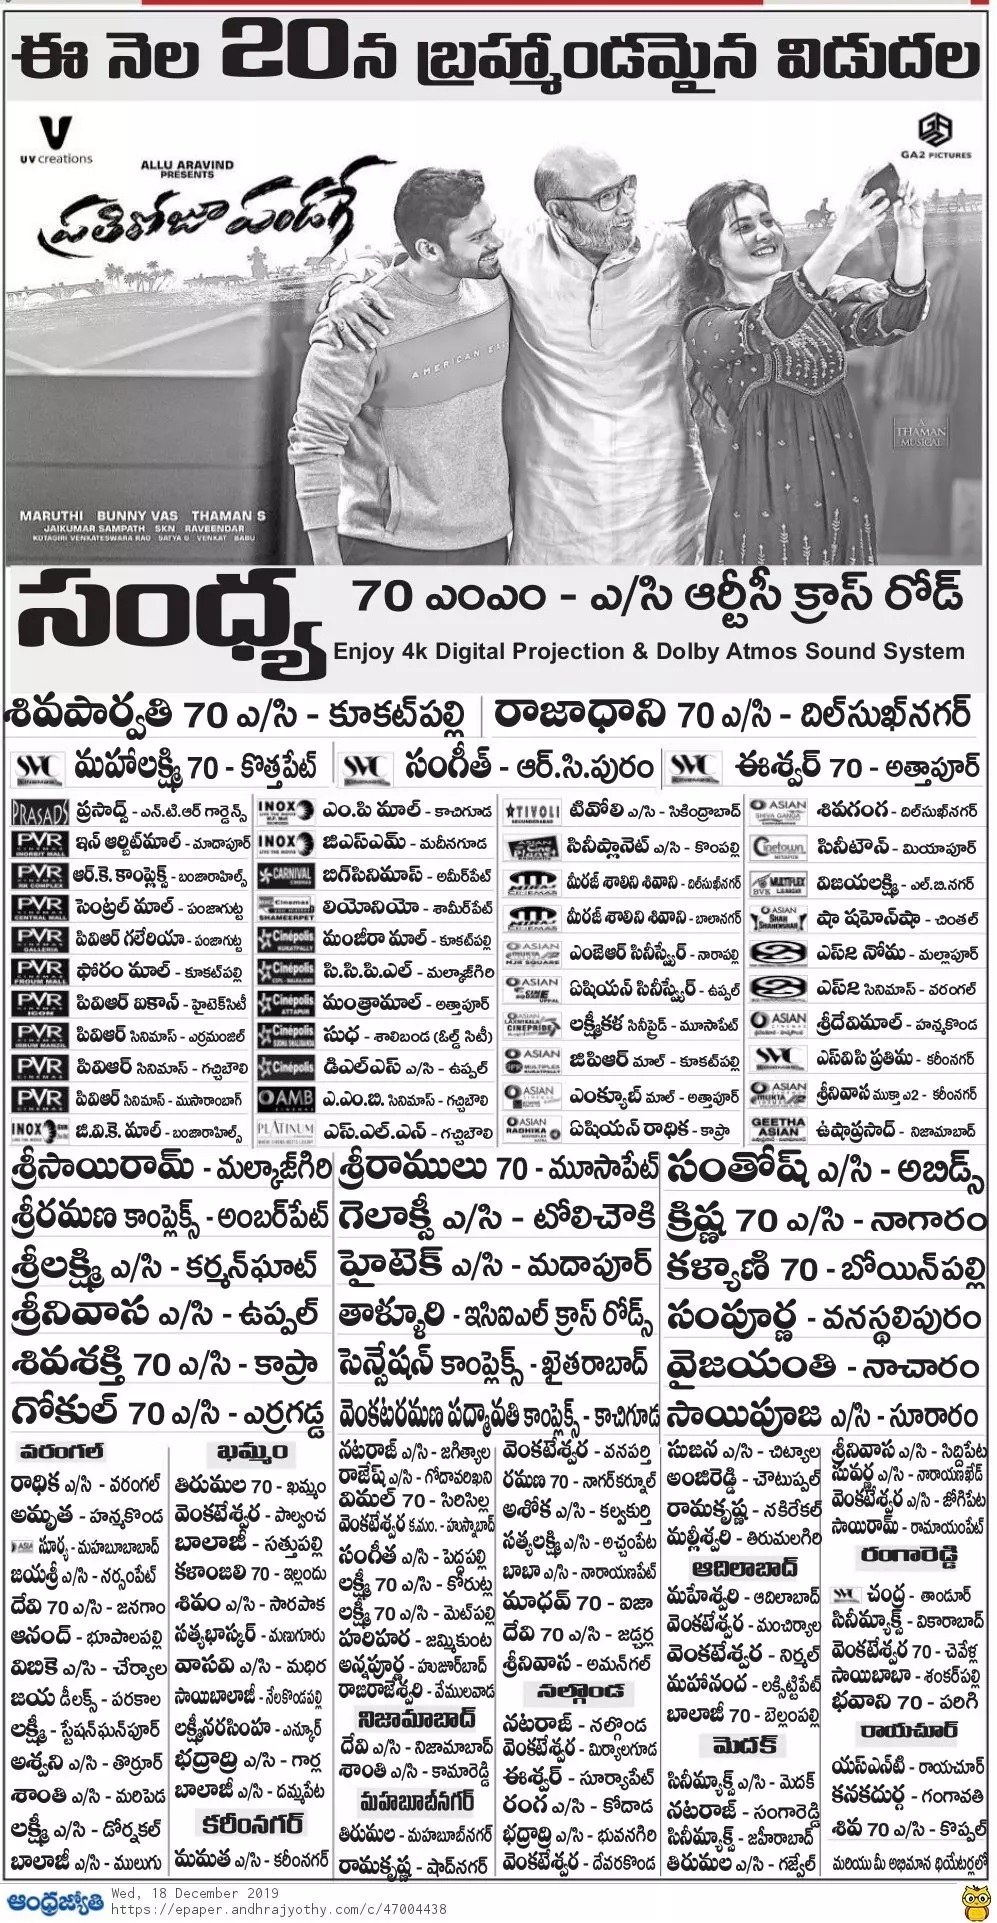 Sai Dharam Tej’s Prati Roju Pandaage Movie Hyderabad Theaters List